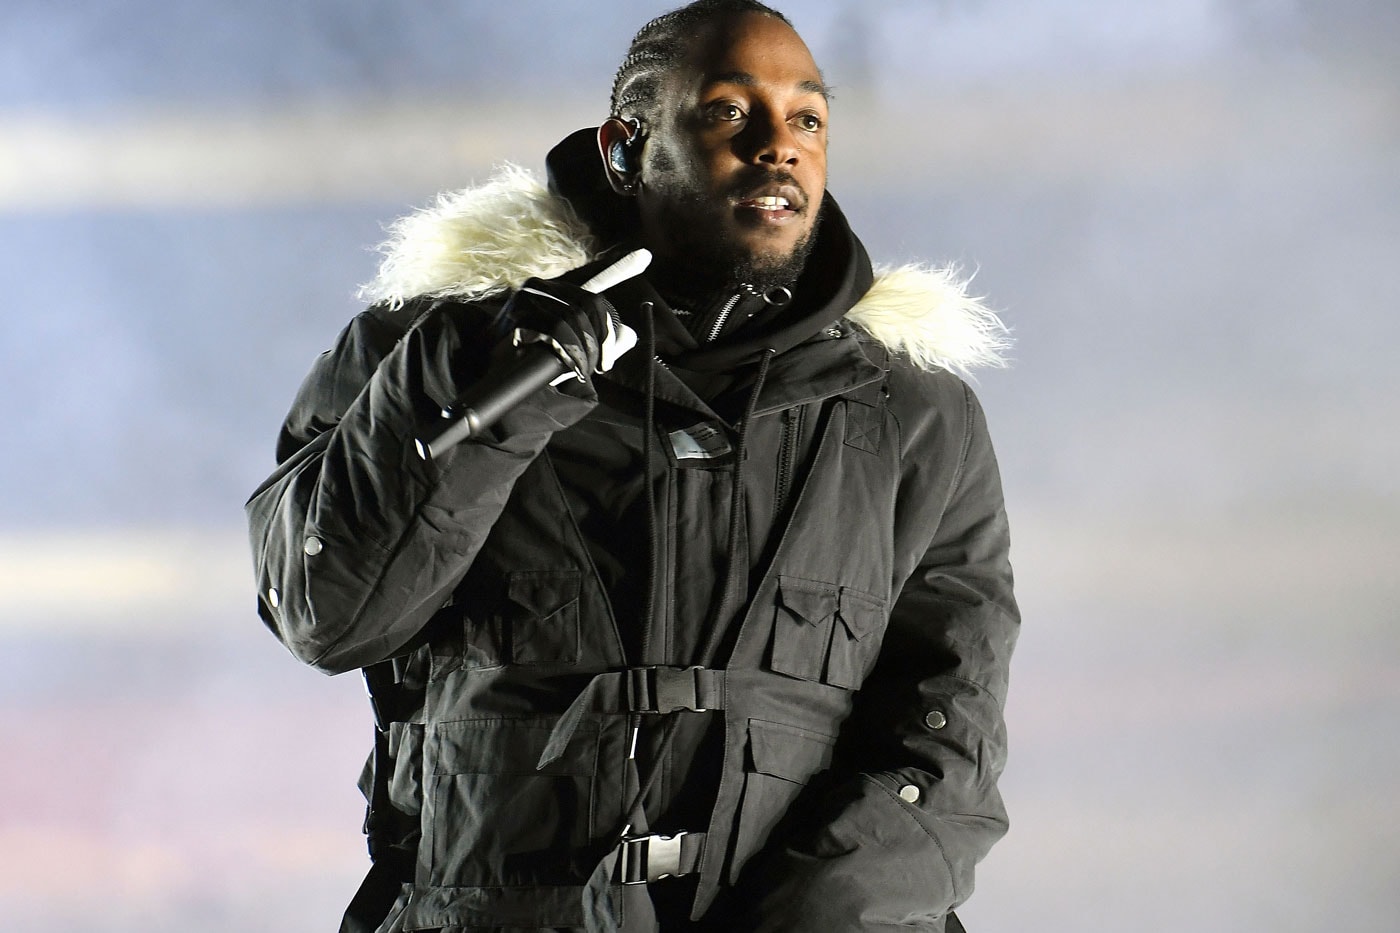 Kendrick Lamar - Look Out For Detox